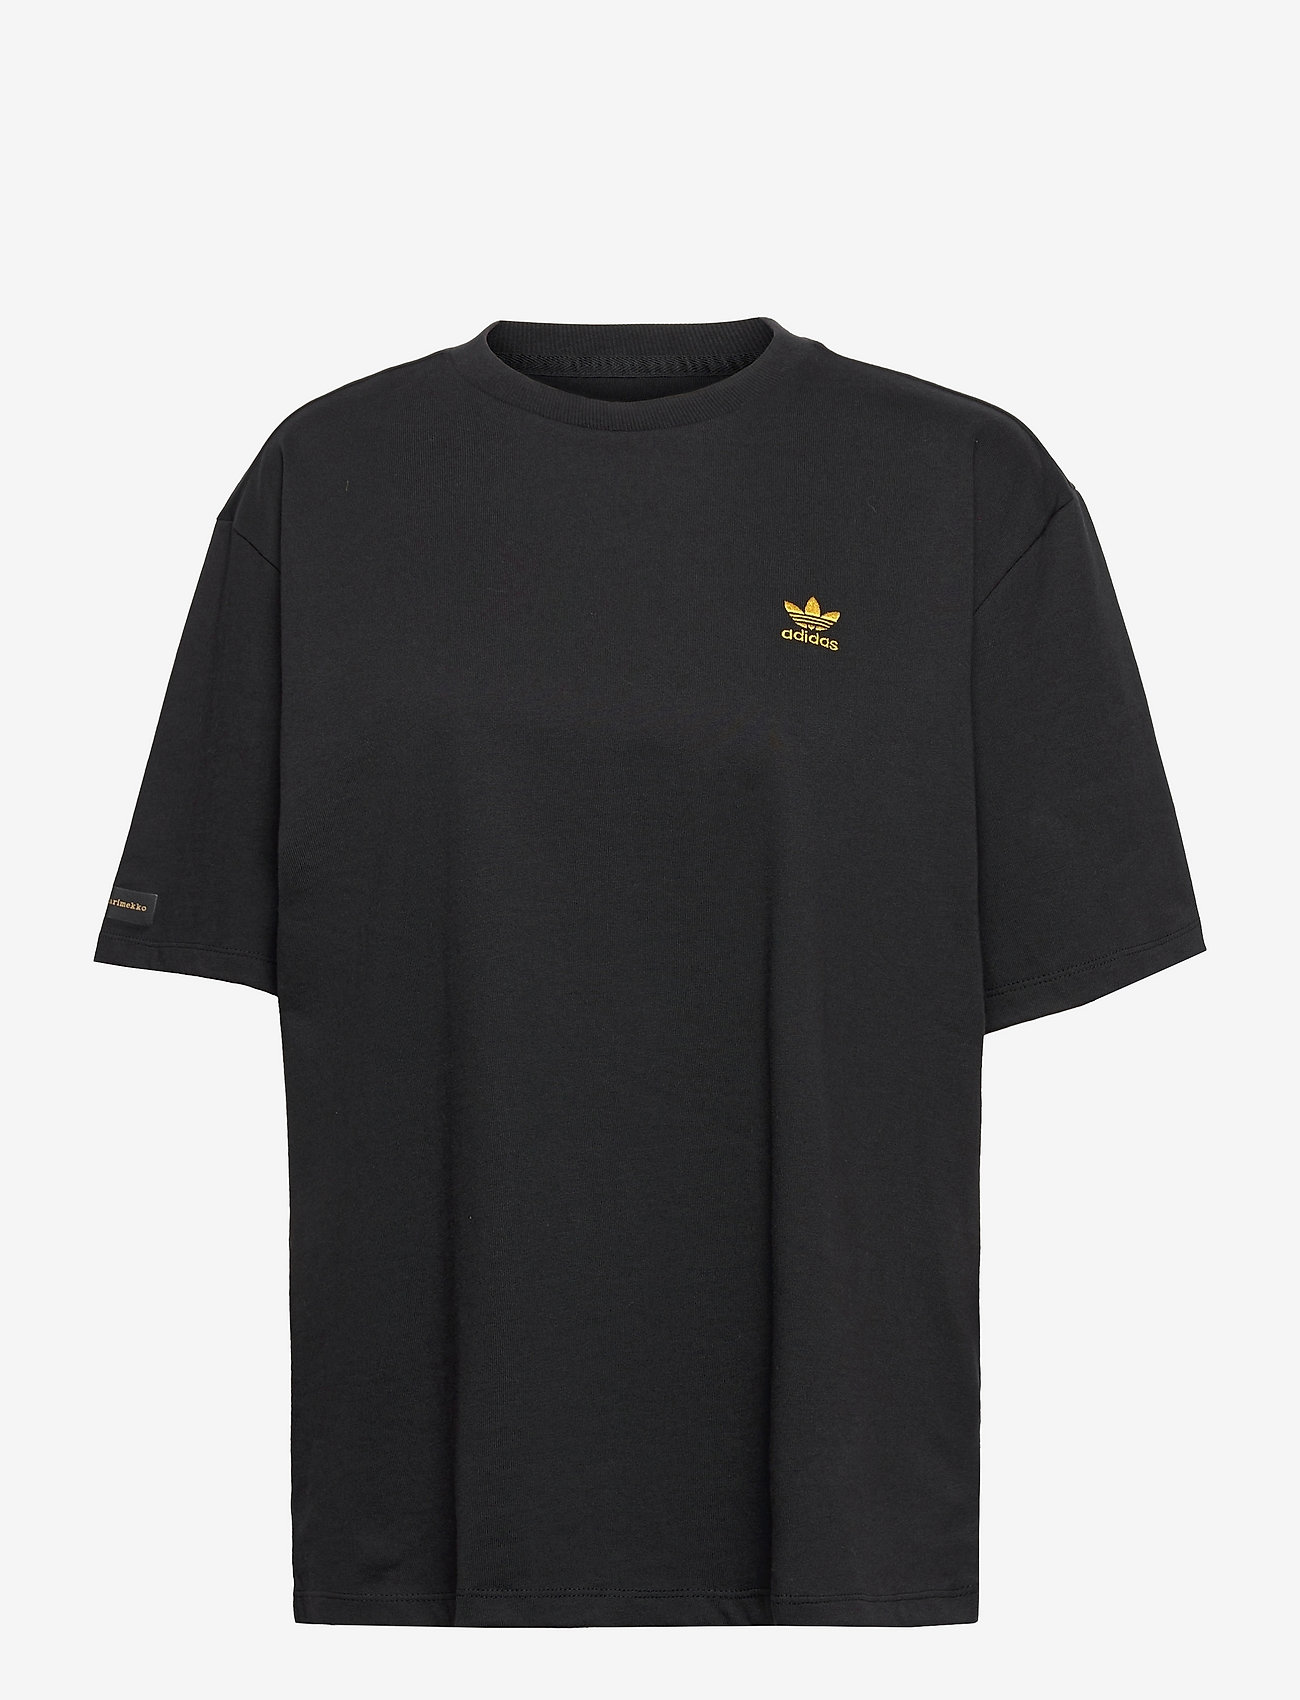 adidas Originals Marimekko Oversized Tee - T-shirts | Boozt.com